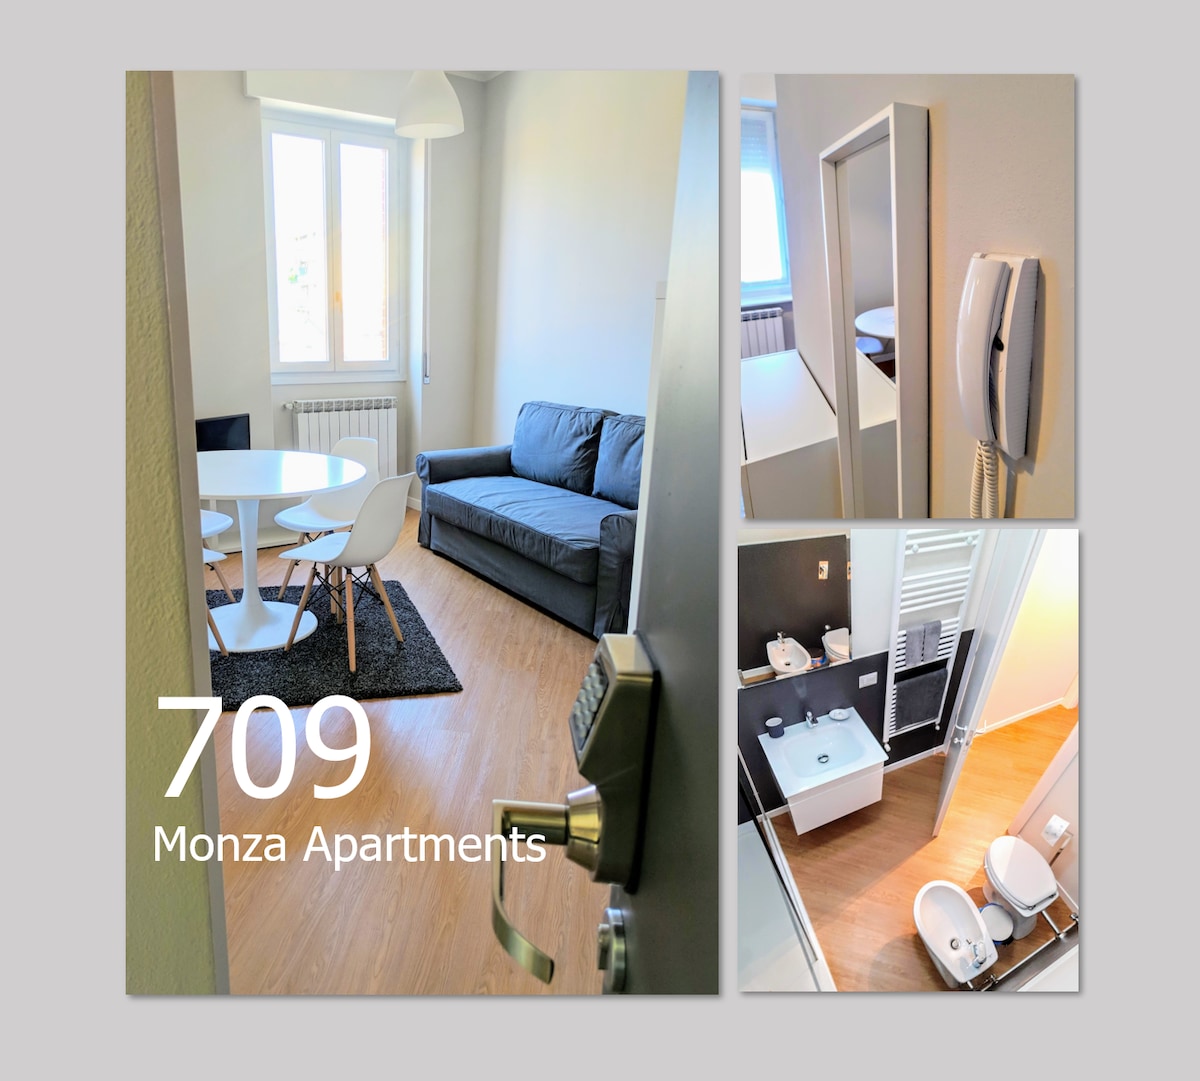 Monza Apartments, 709